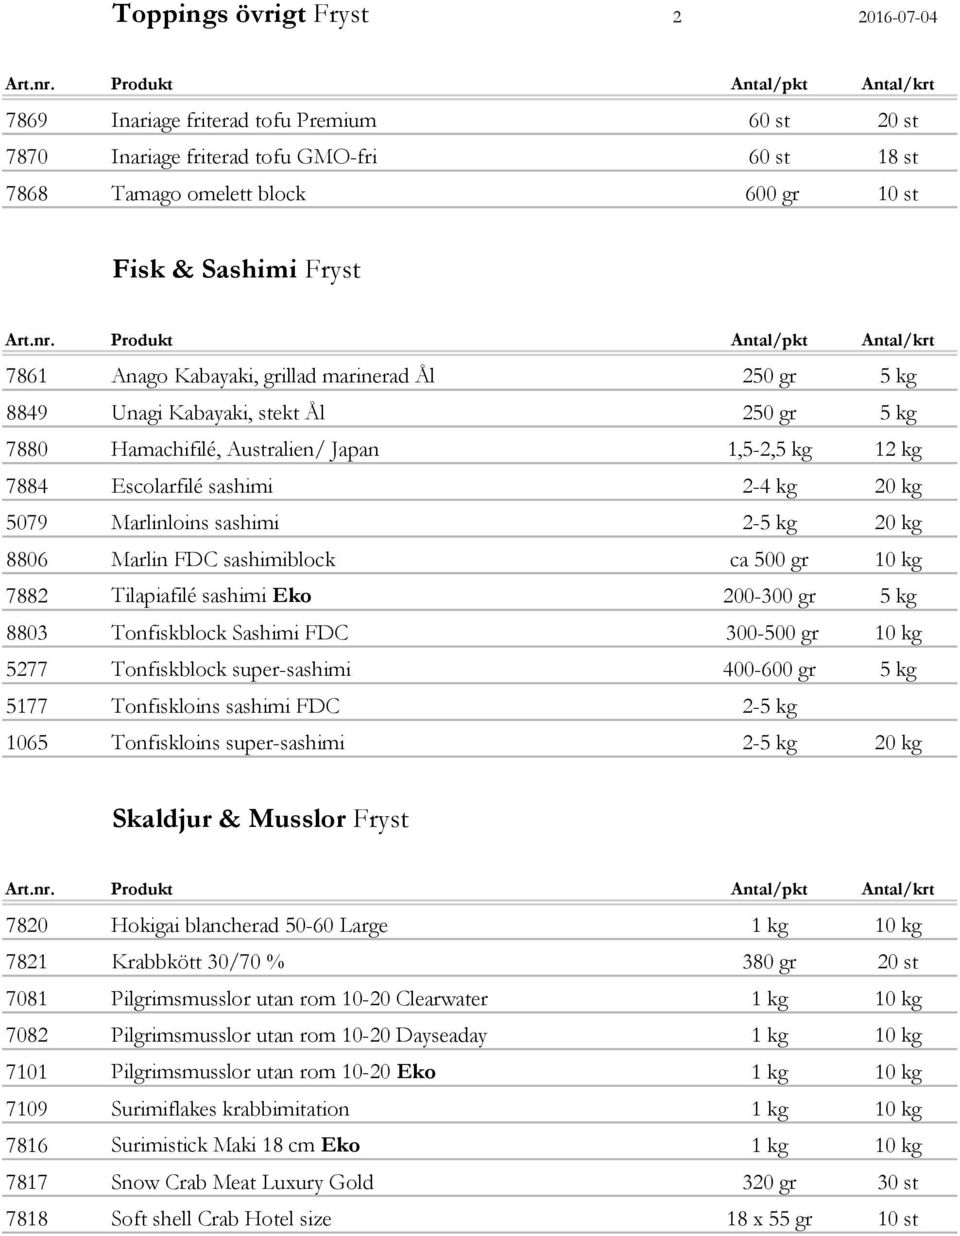 sashimi 2-5 kg 20 kg 8806 Marlin FDC sashimiblock ca 500 gr 10 kg 7882 Tilapiafilé sashimi Eko 200-300 gr 5 kg 8803 Tonfiskblock Sashimi FDC 300-500 gr 10 kg 5277 Tonfiskblock super-sashimi 400-600